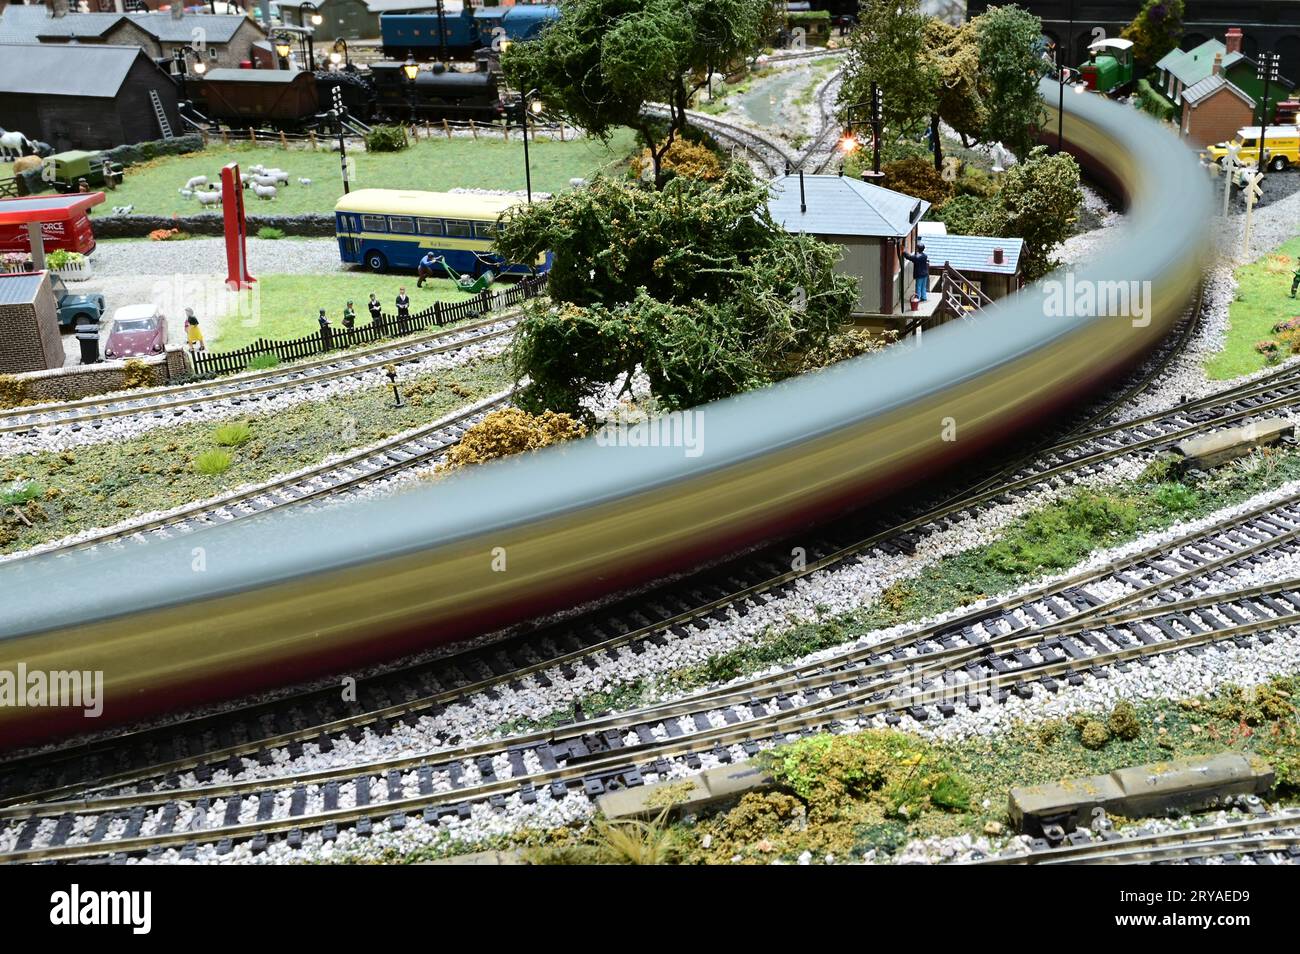 Demonstration of high velocity using a model railway. Stock Photo